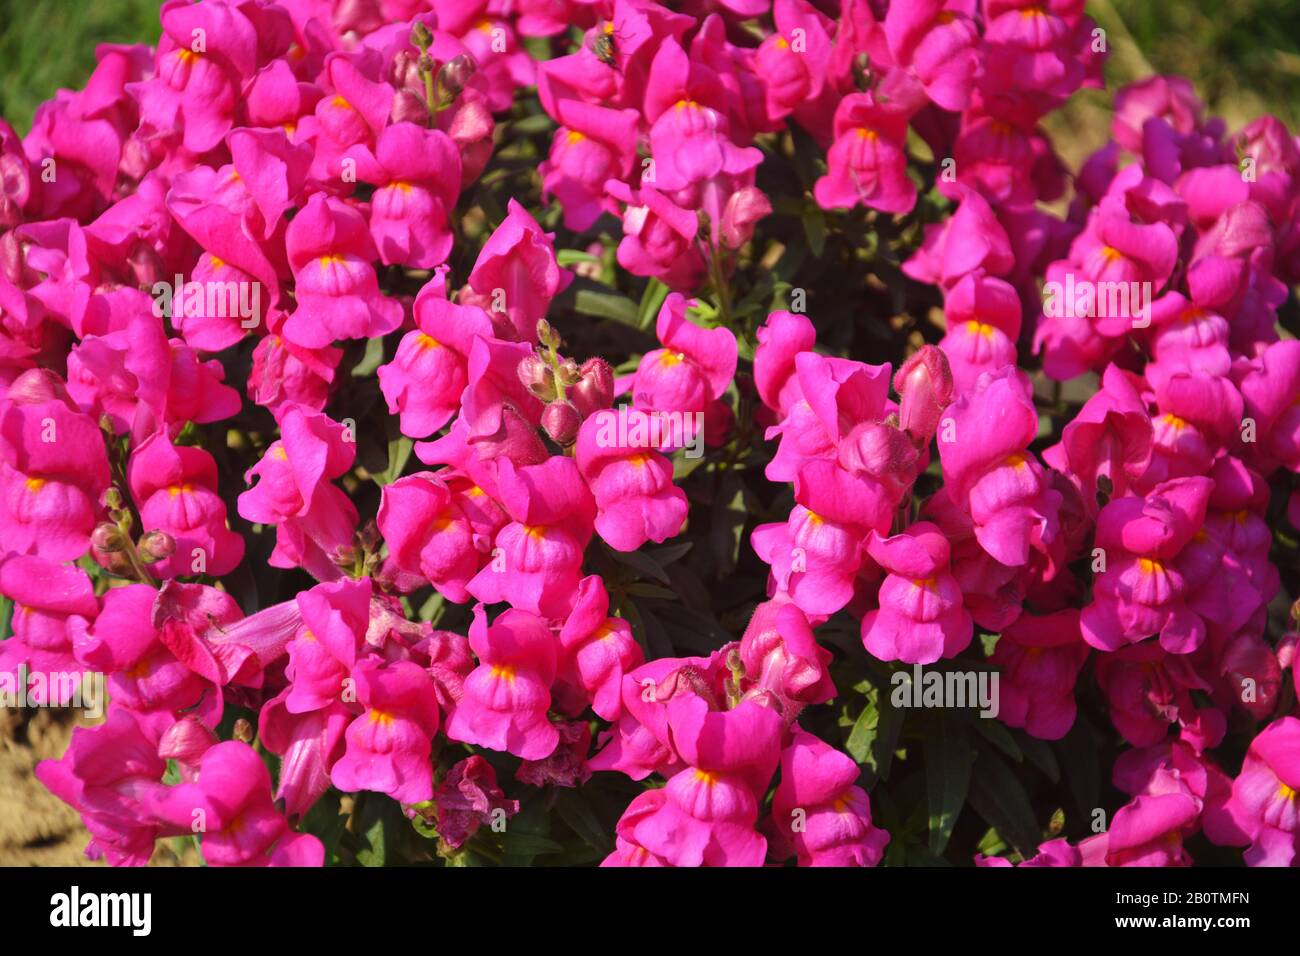 Close up of best annual flowers, antirrhinum majus, antinium flowers, commom snapdragon flowering plants growing in garden, selective focusing Stock Photo